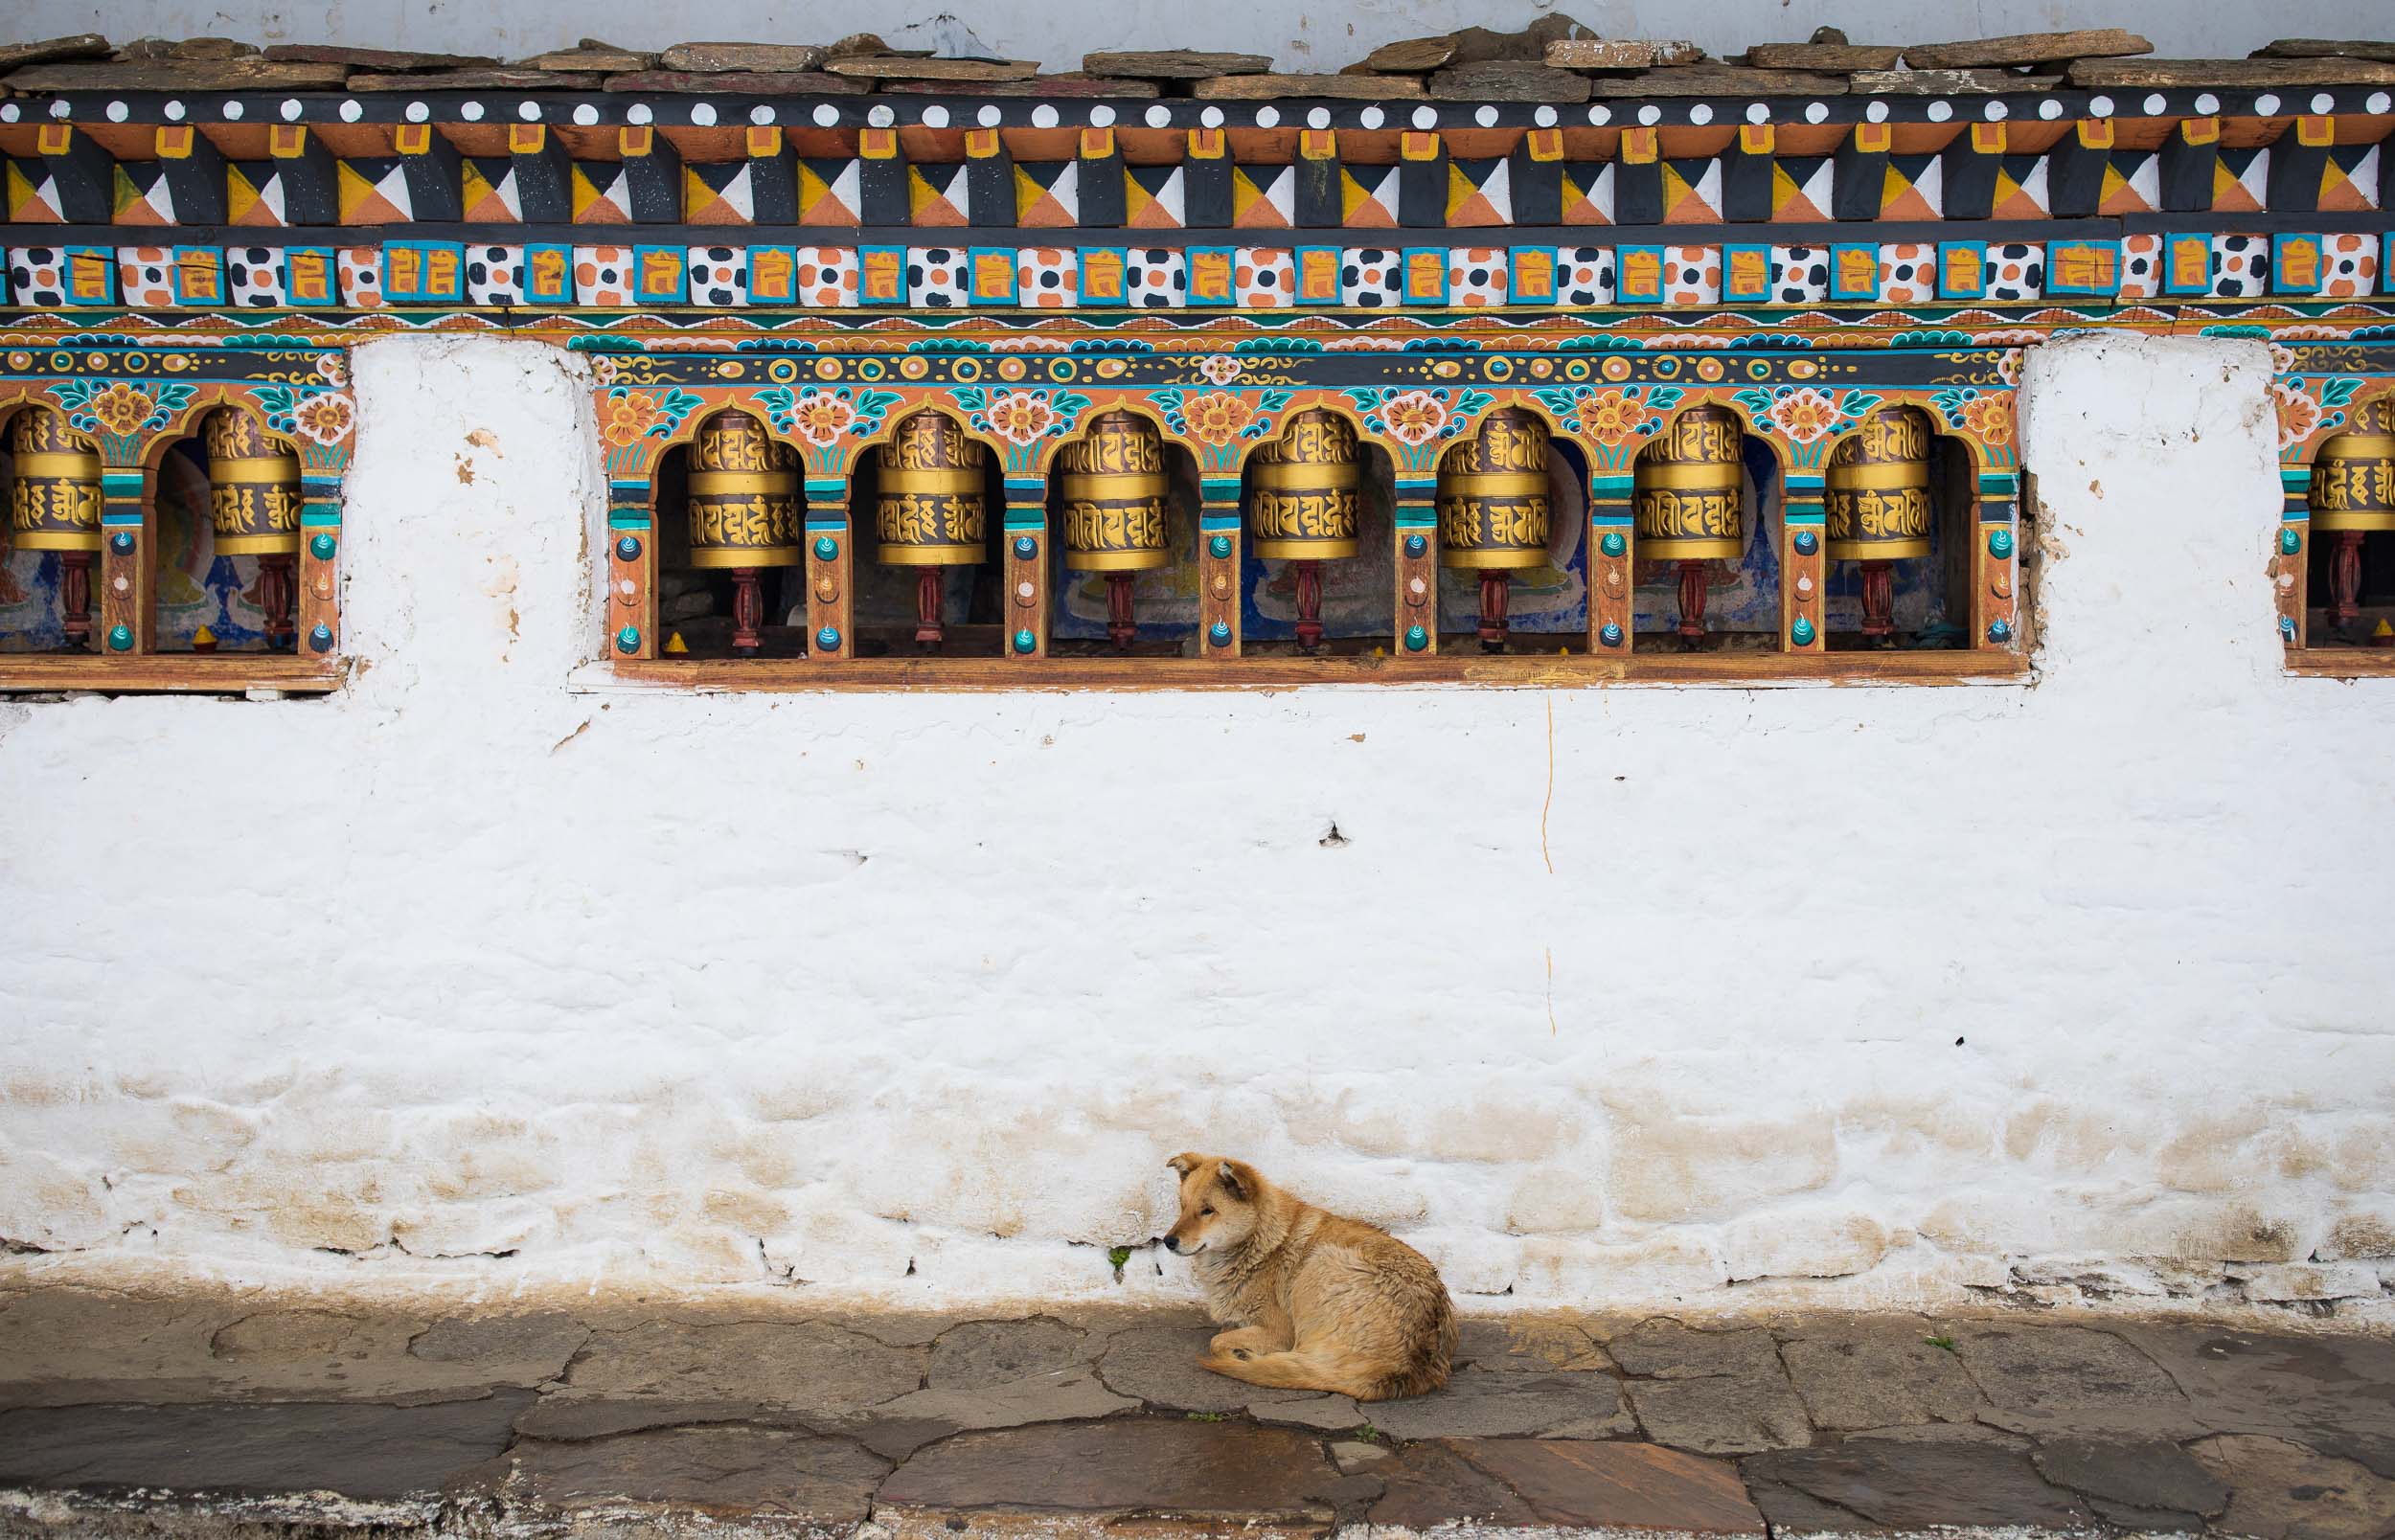 Bhutan : Photographed by Jed Share